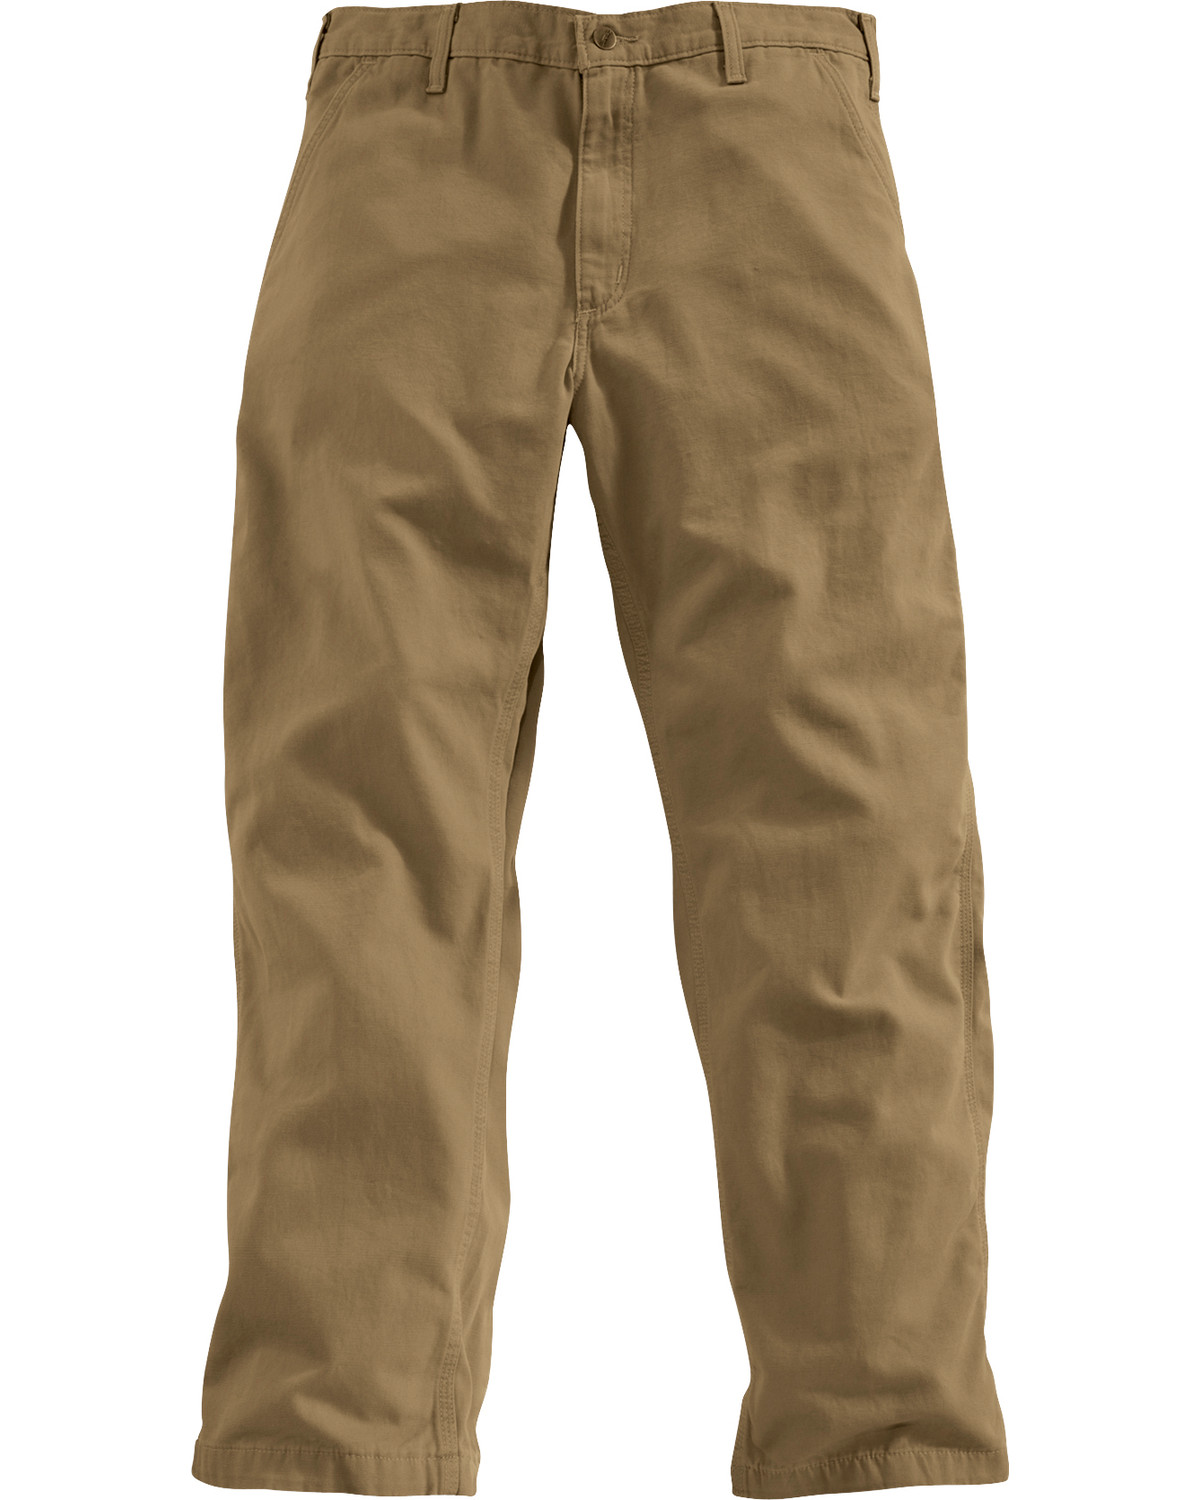 Carhartt Men's Canvas Khaki Relaxed Fit Pants | Boot Barn